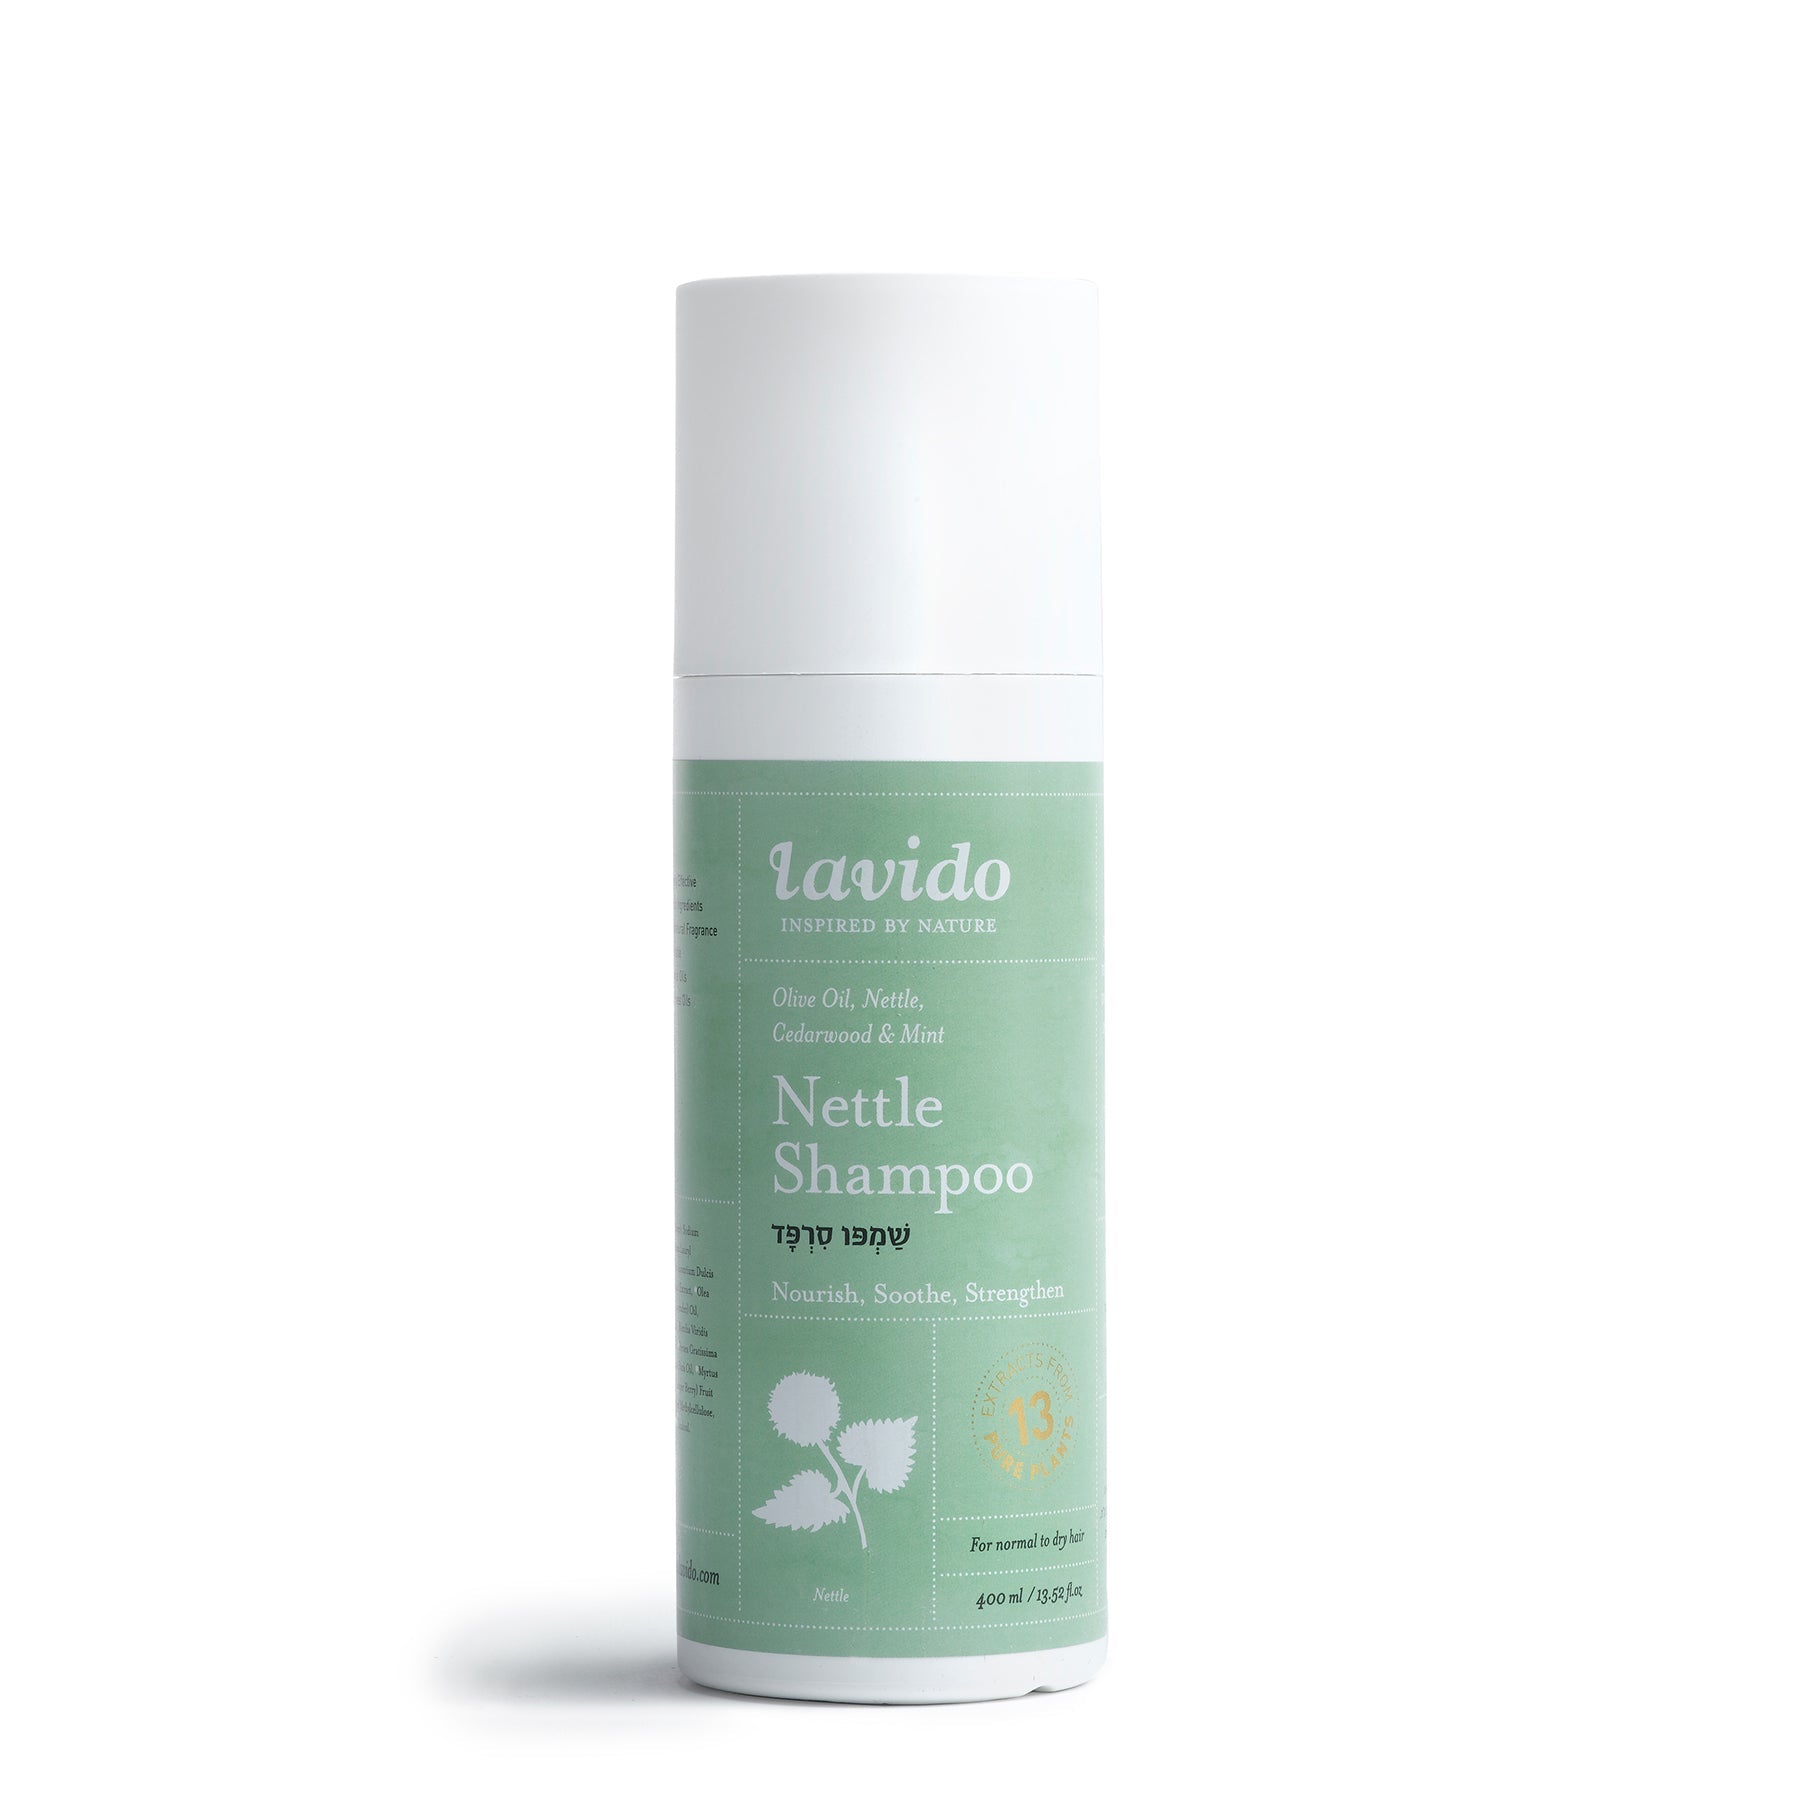 Nettle Shampoo - cedar olive oil and mint